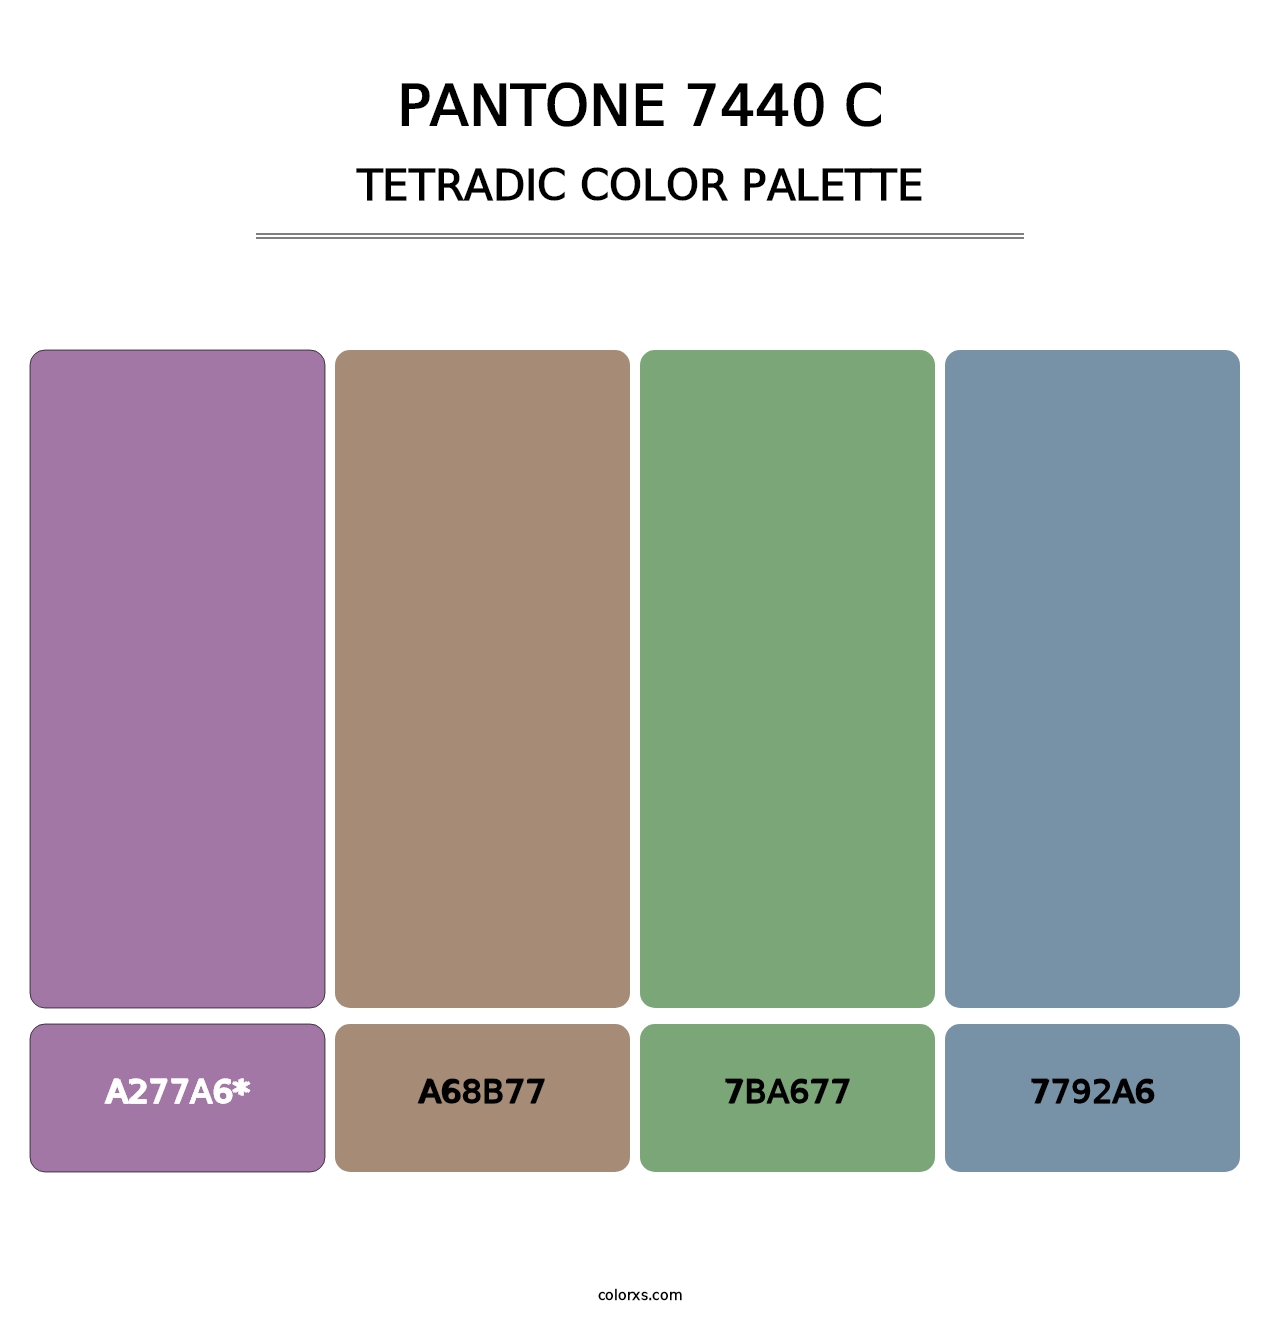 PANTONE 7440 C - Tetradic Color Palette